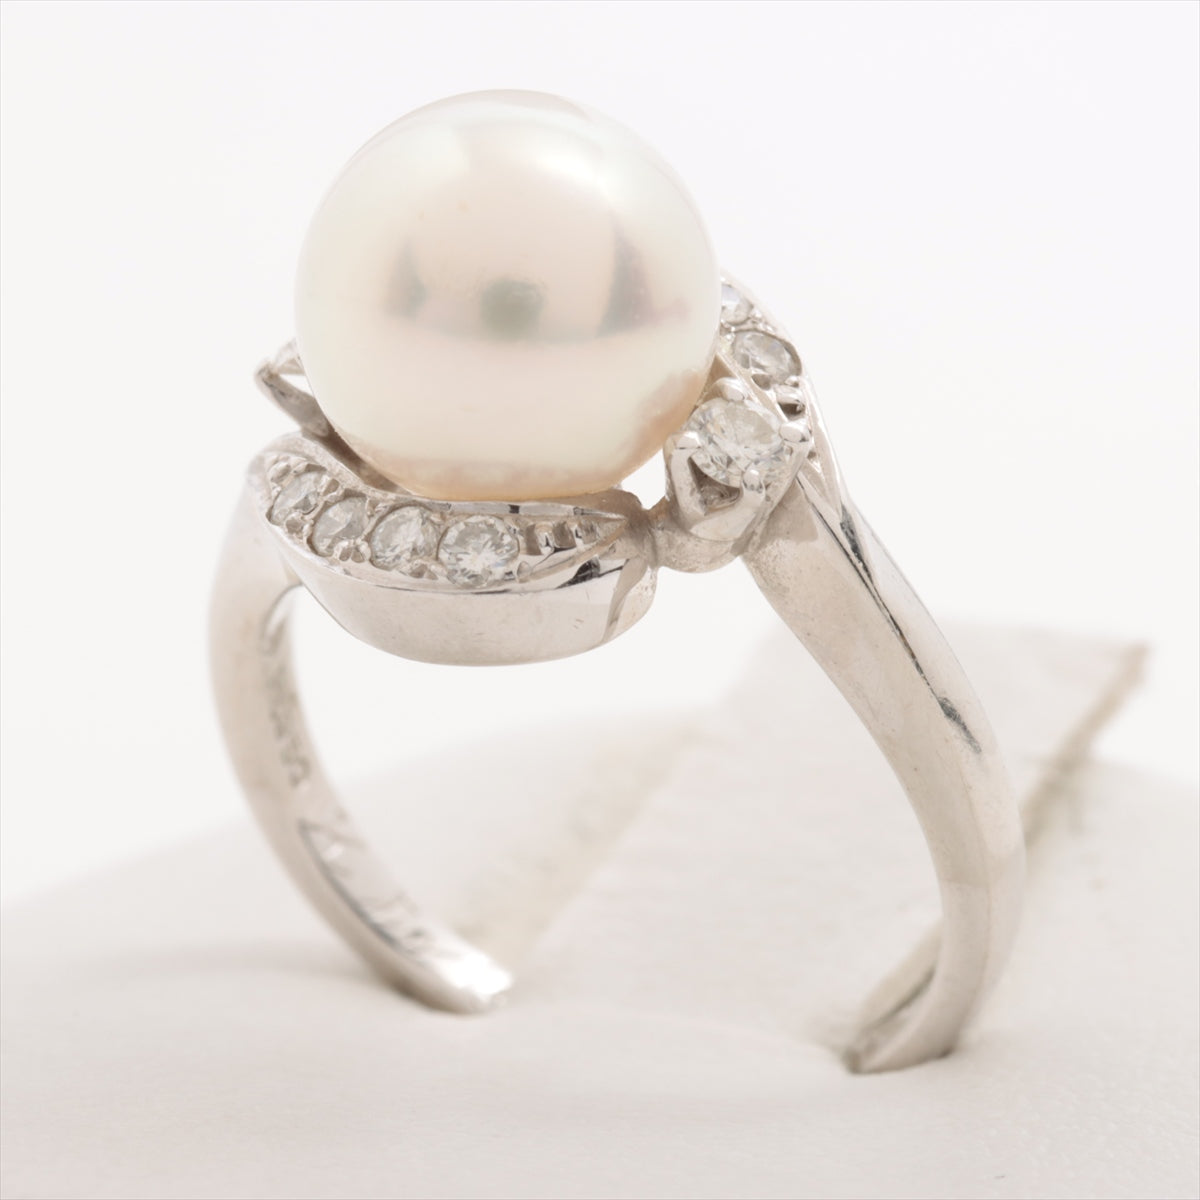 Mikimoto Pearl Diamond Ring Pt950 5.4g Approx. 8.5 mm